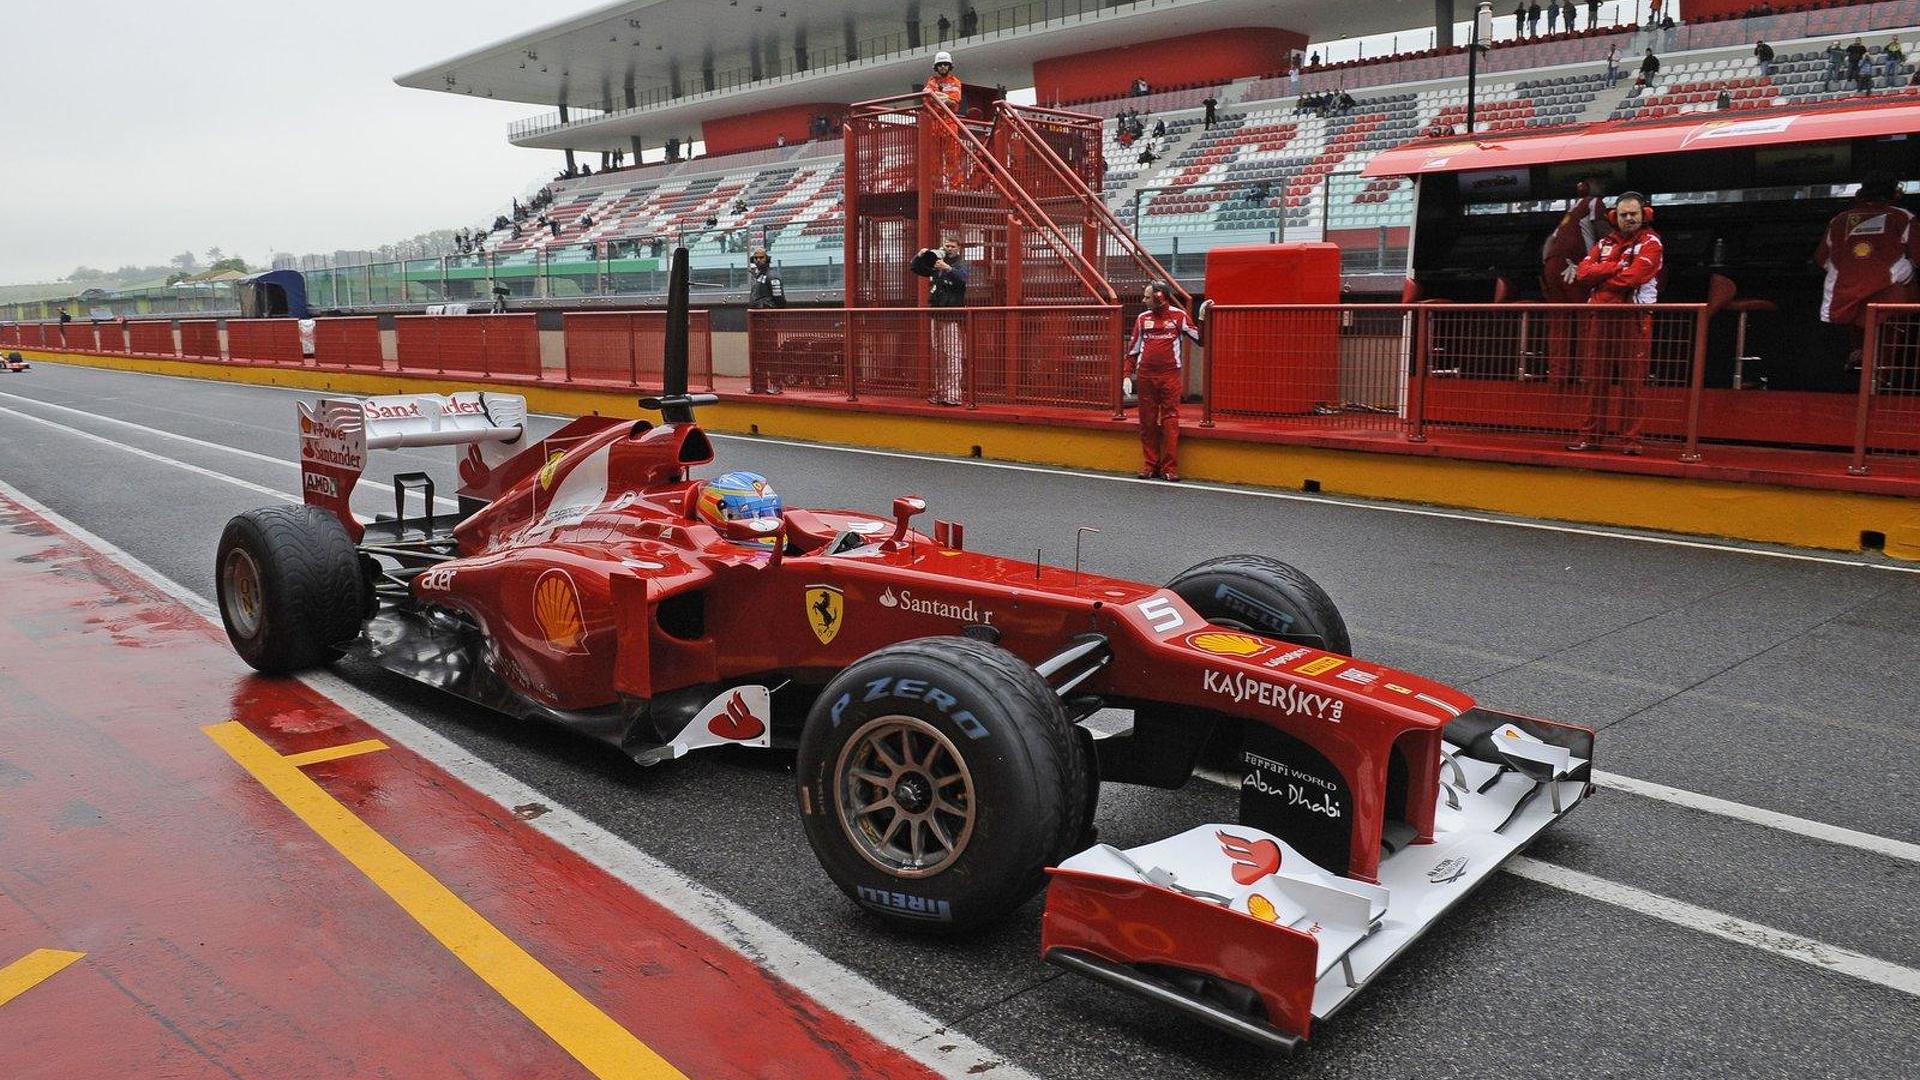 F1 testing at Mugello in 2012.